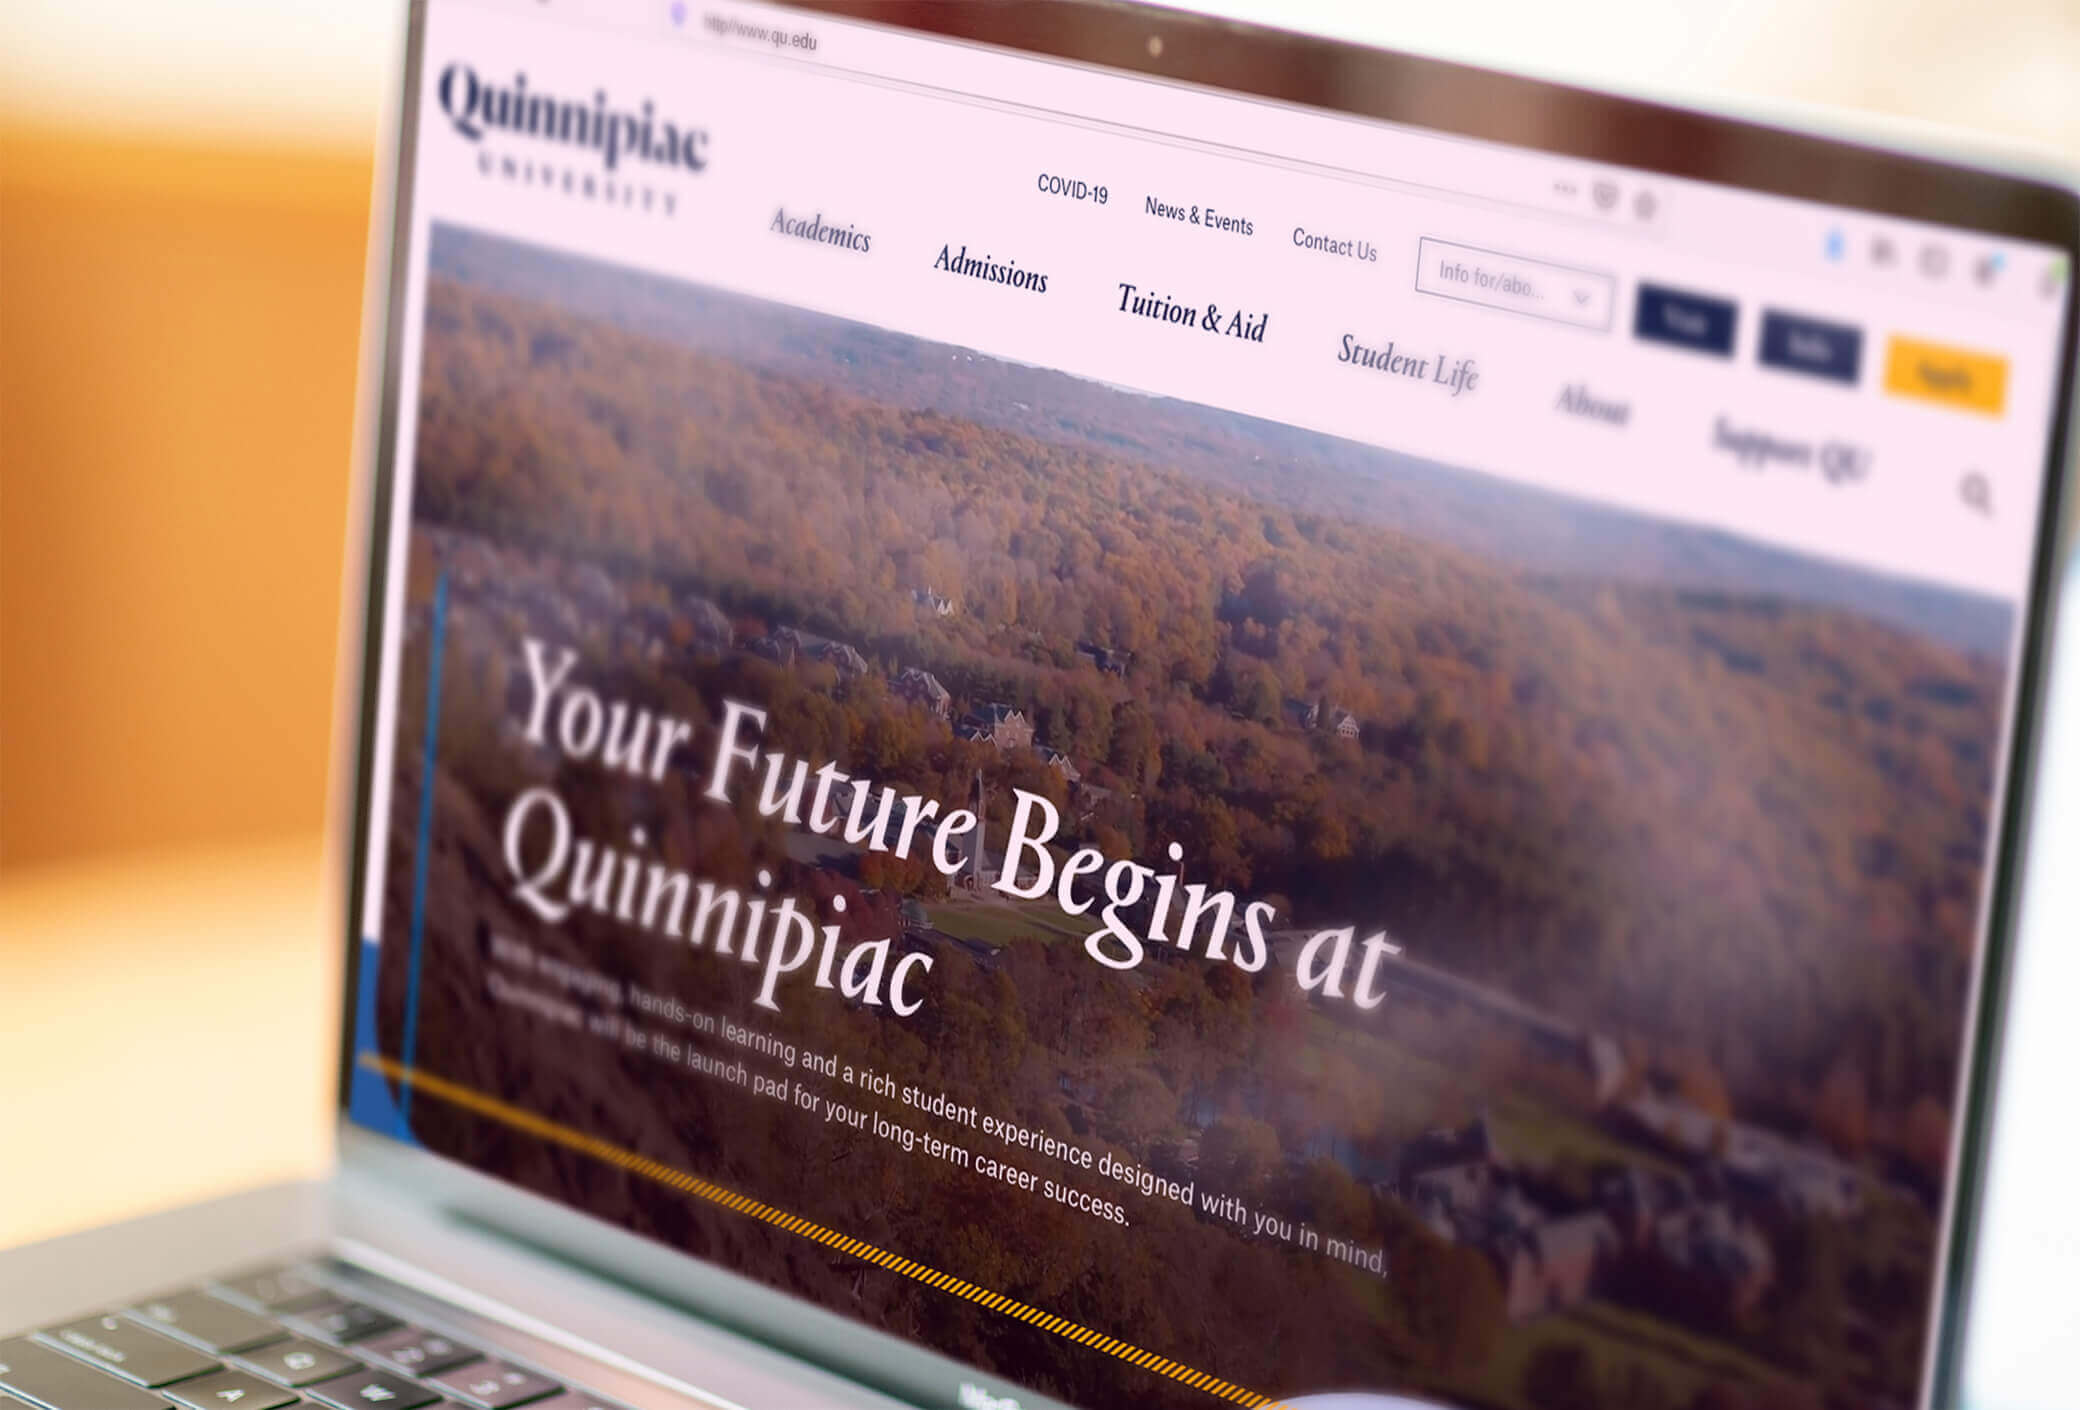 Laptop screen showing the landing page of Quinnipiac's website..